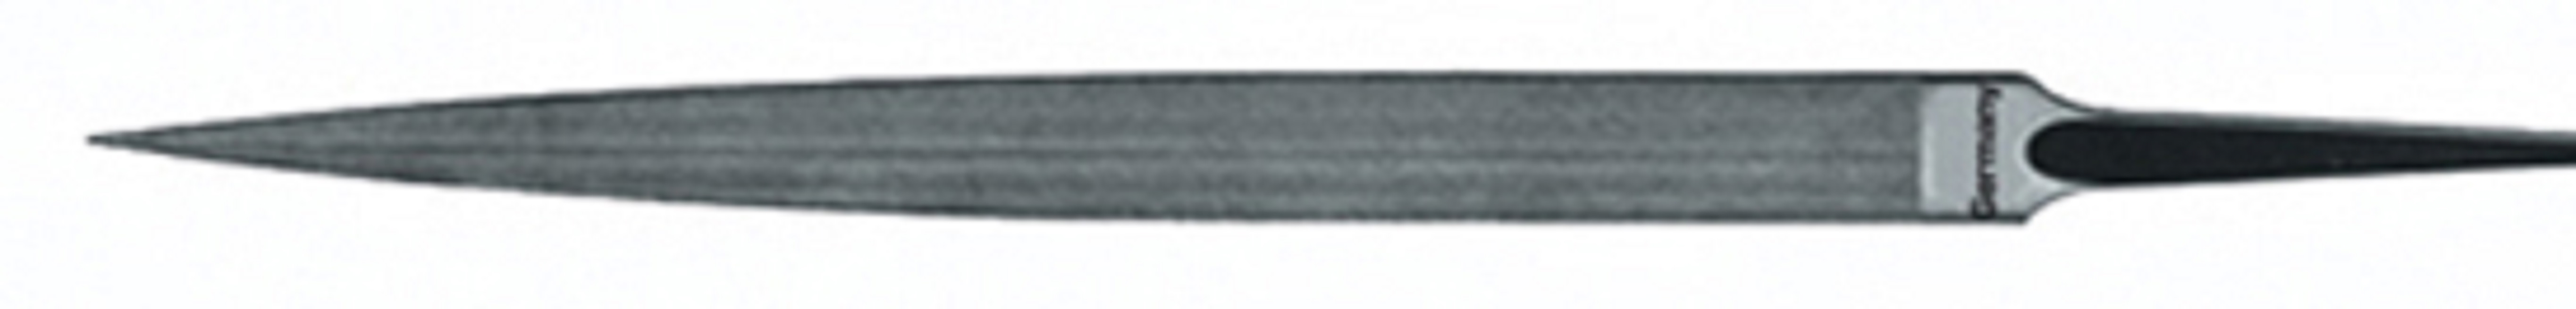 NARROW HALF ROUND 6"(150mm) FILE /Swiss Cut #2 - Click Image to Close